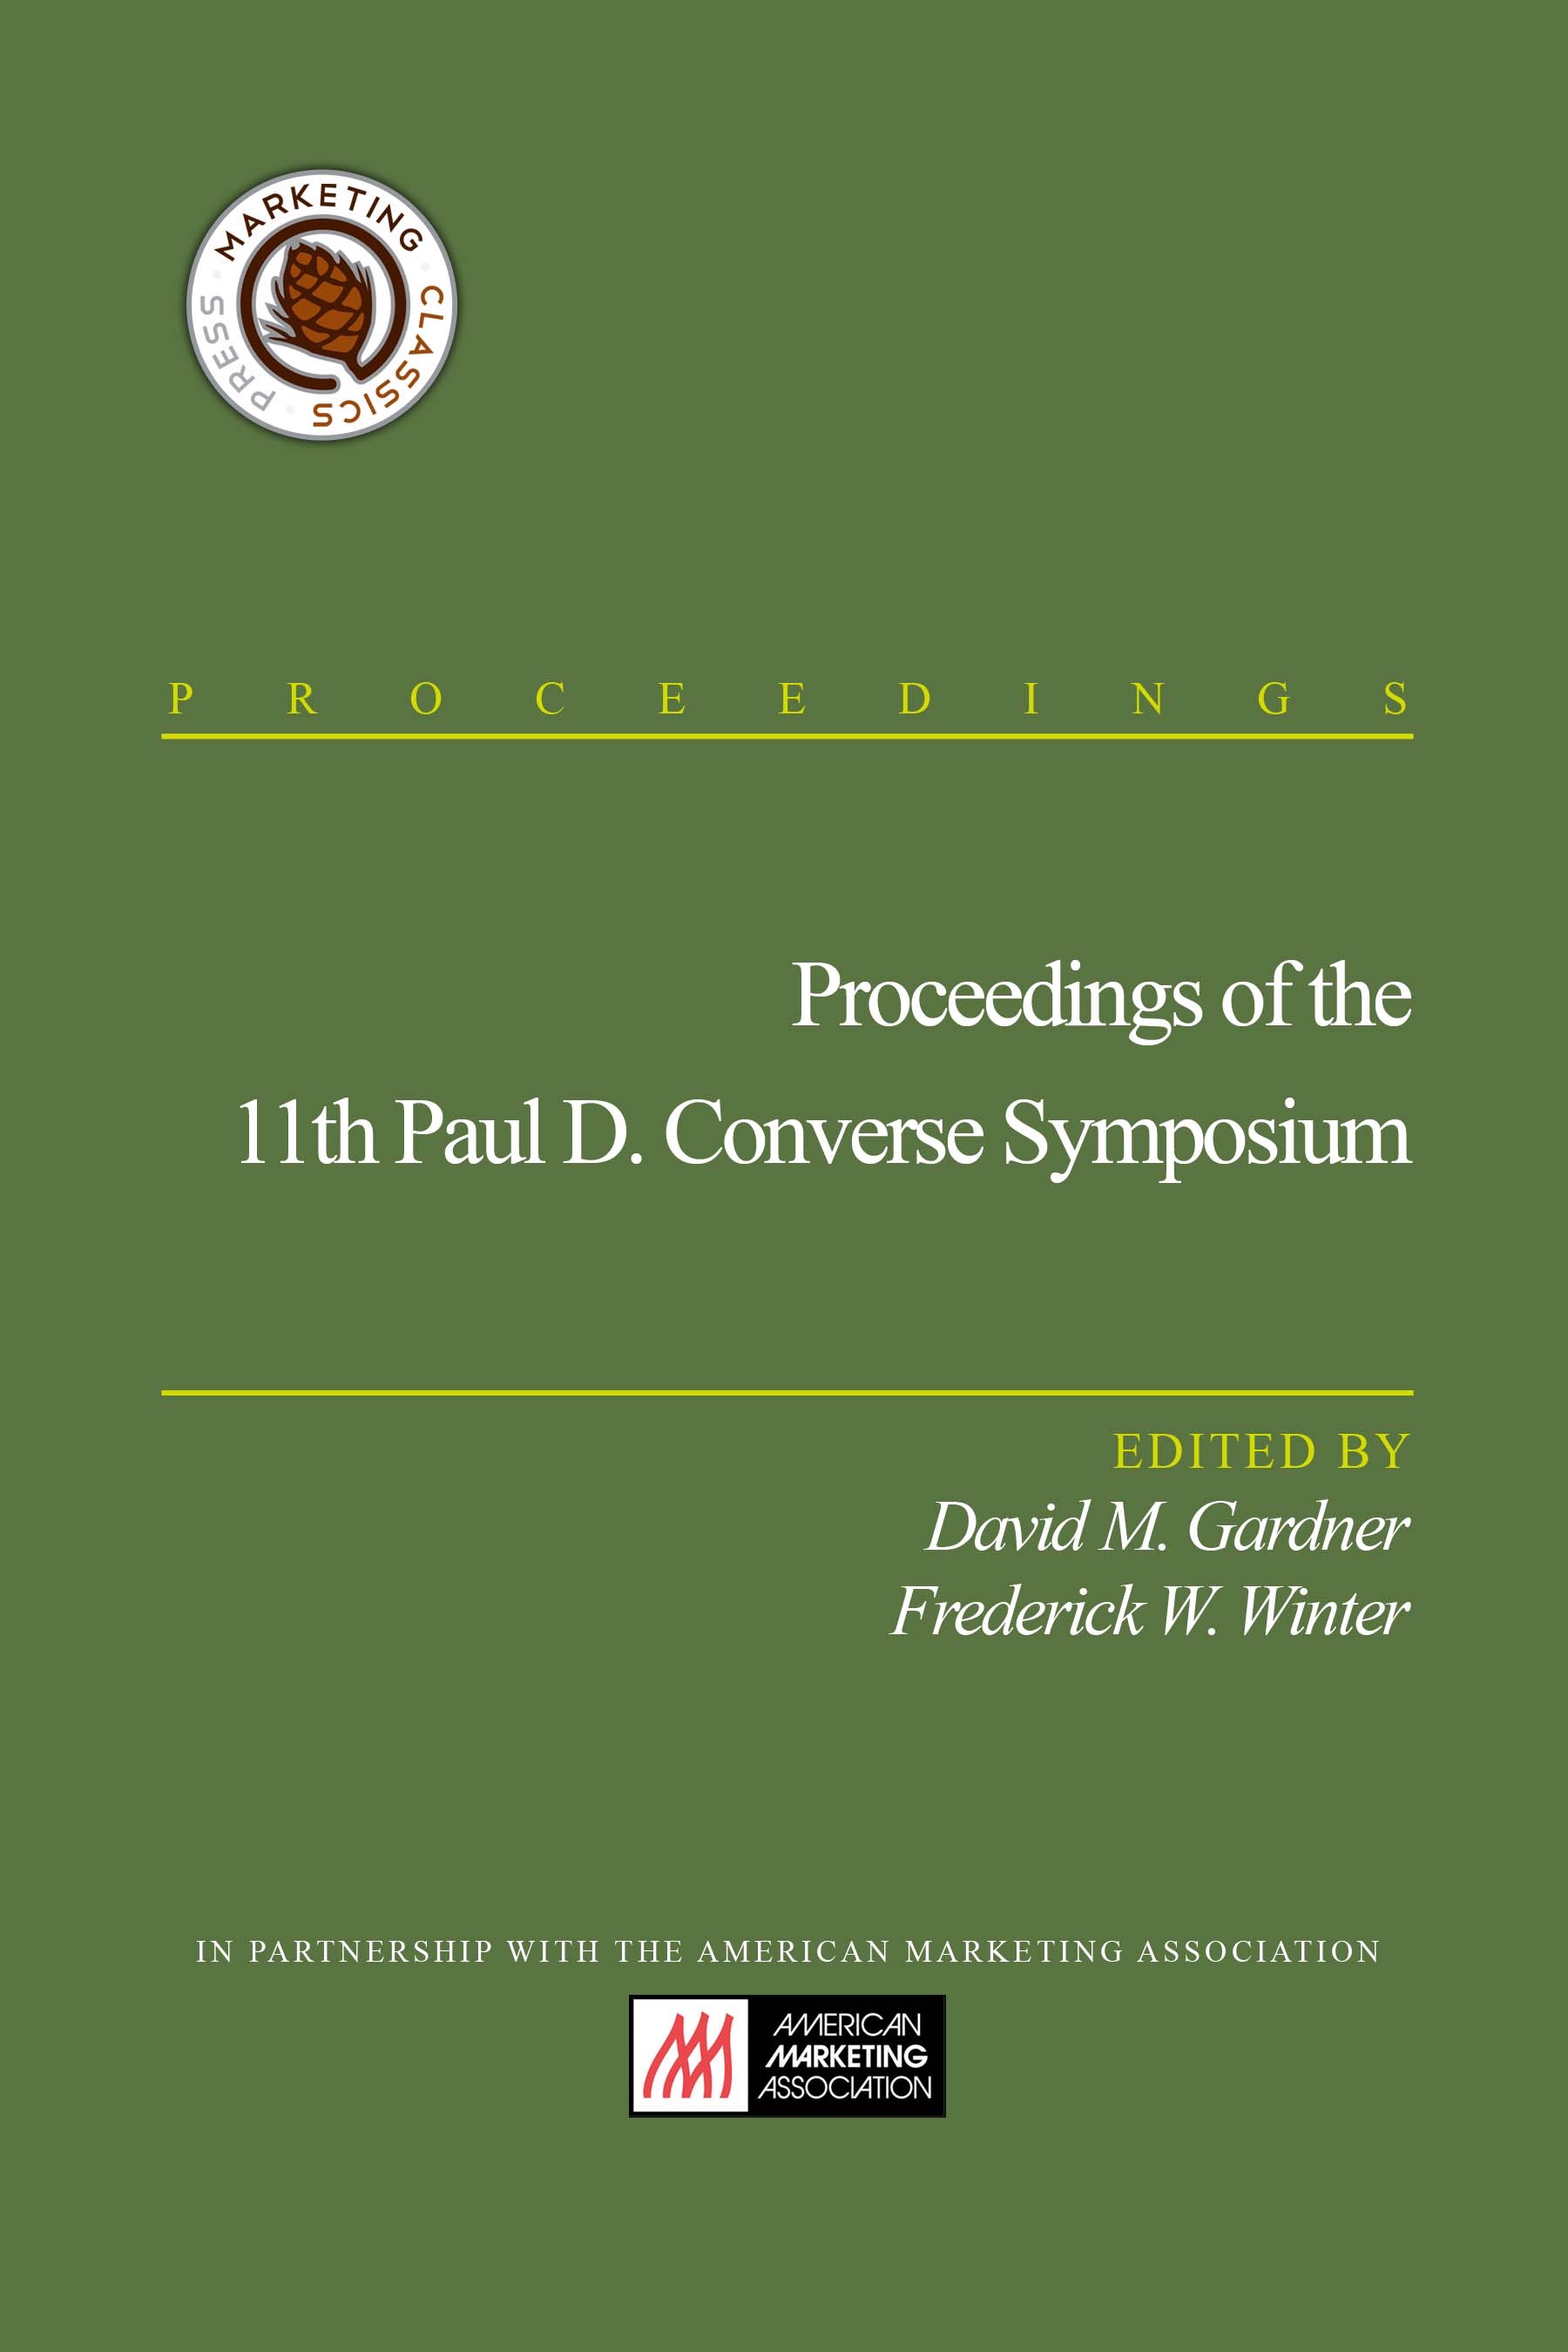 11th Converse Symposium